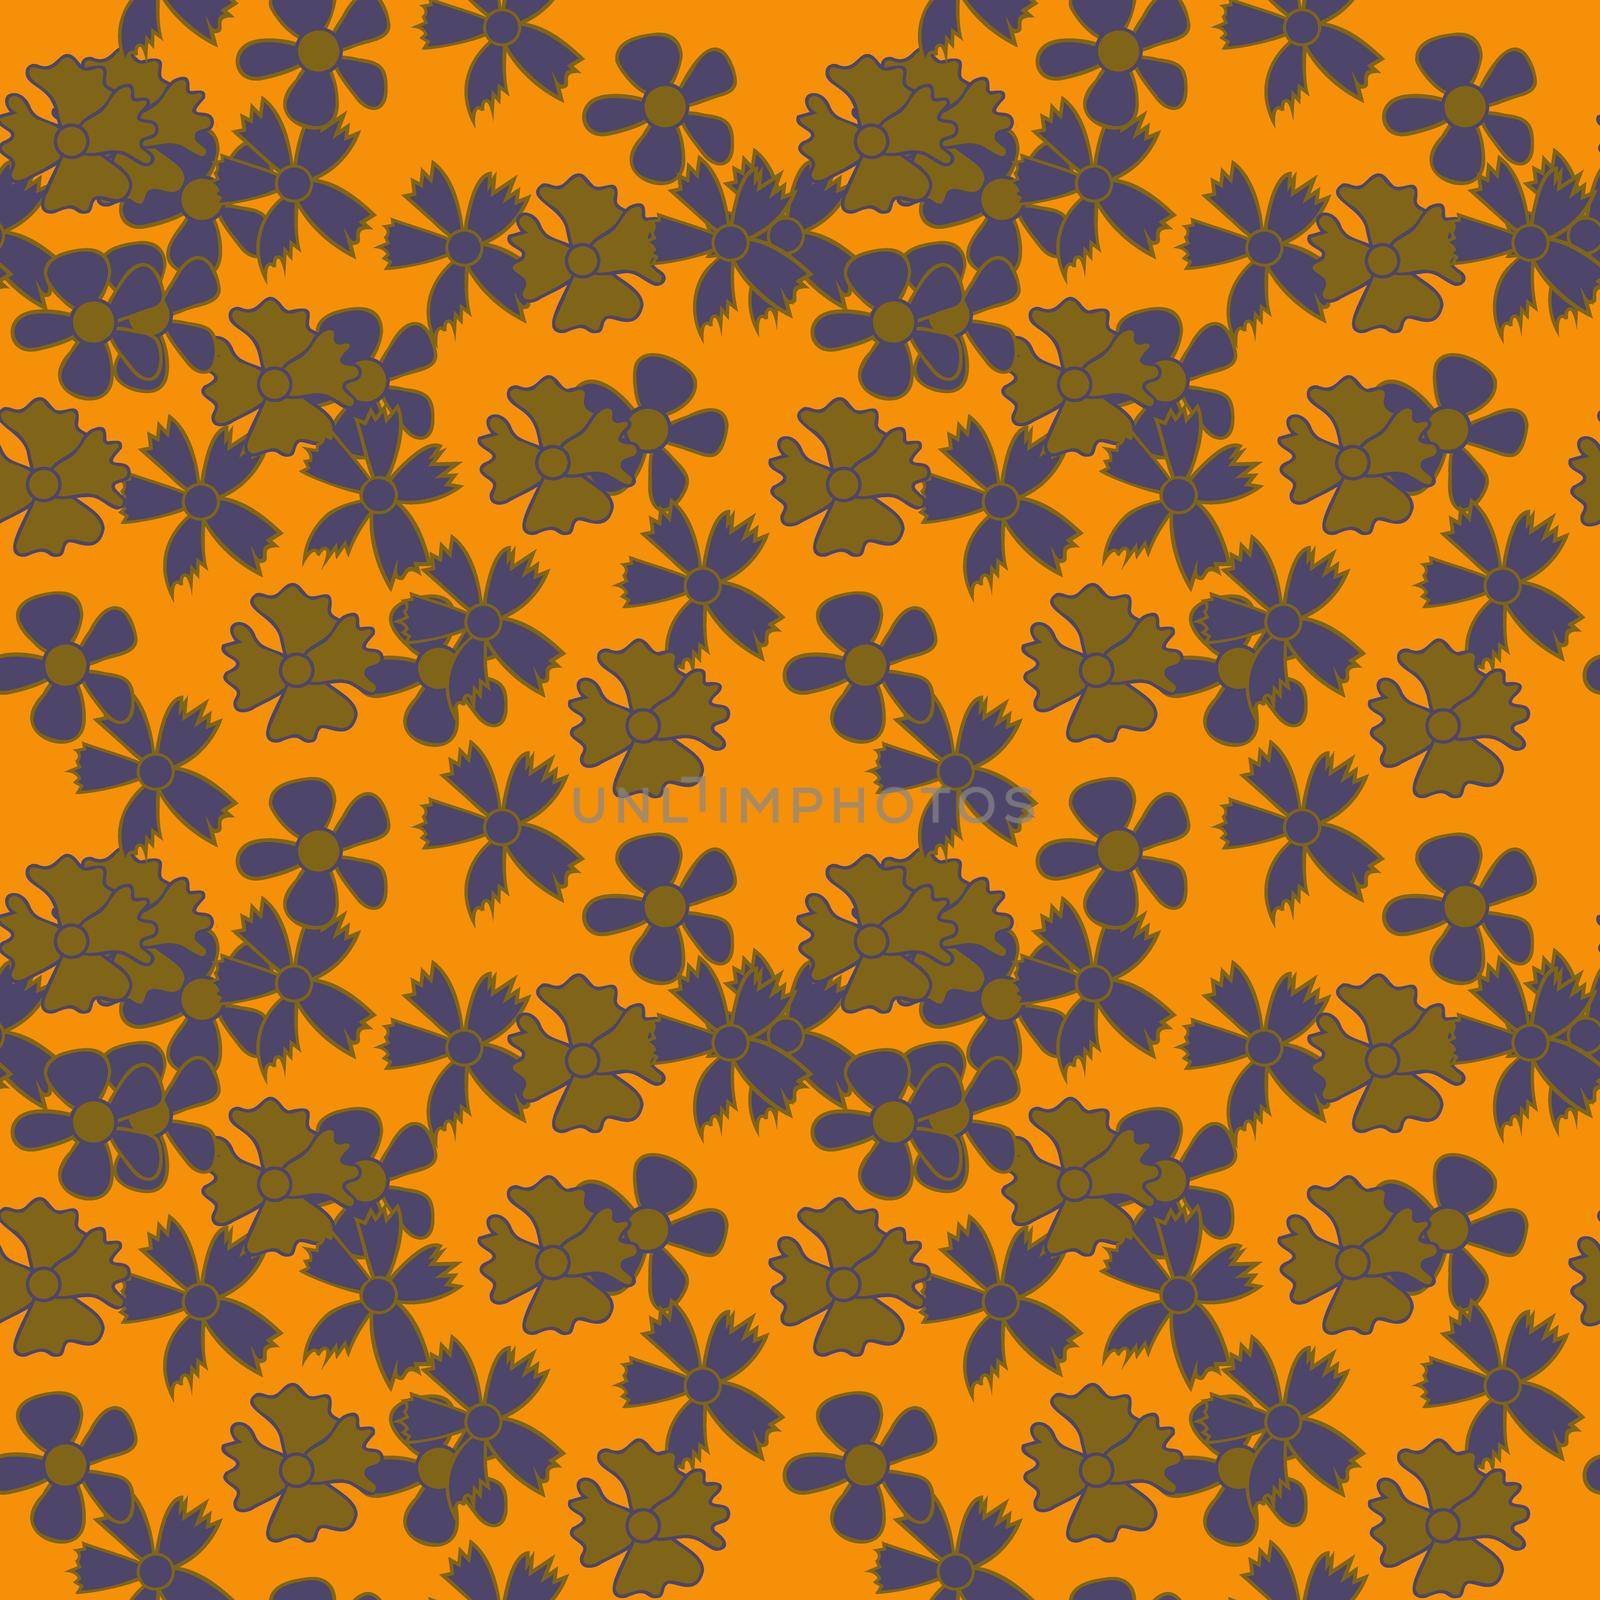 Folk flowers art pattern Floral abstract surface design  Seamless pattern by eskimos